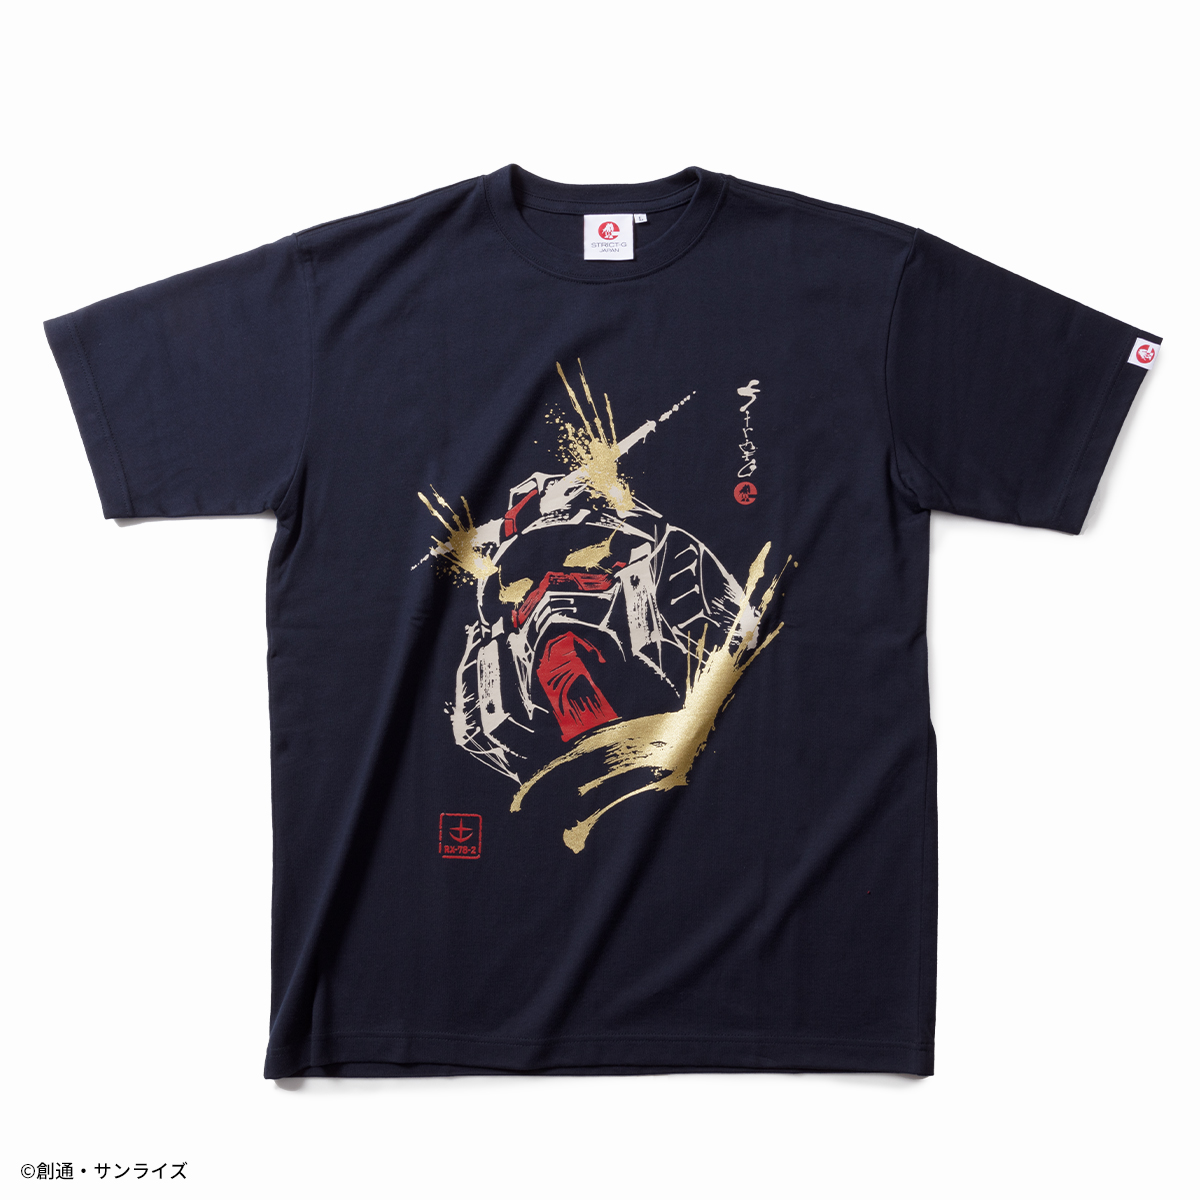 STRICT-G JAPAN『機動戦士ガンダム』筆絵風横顔Tシャツ